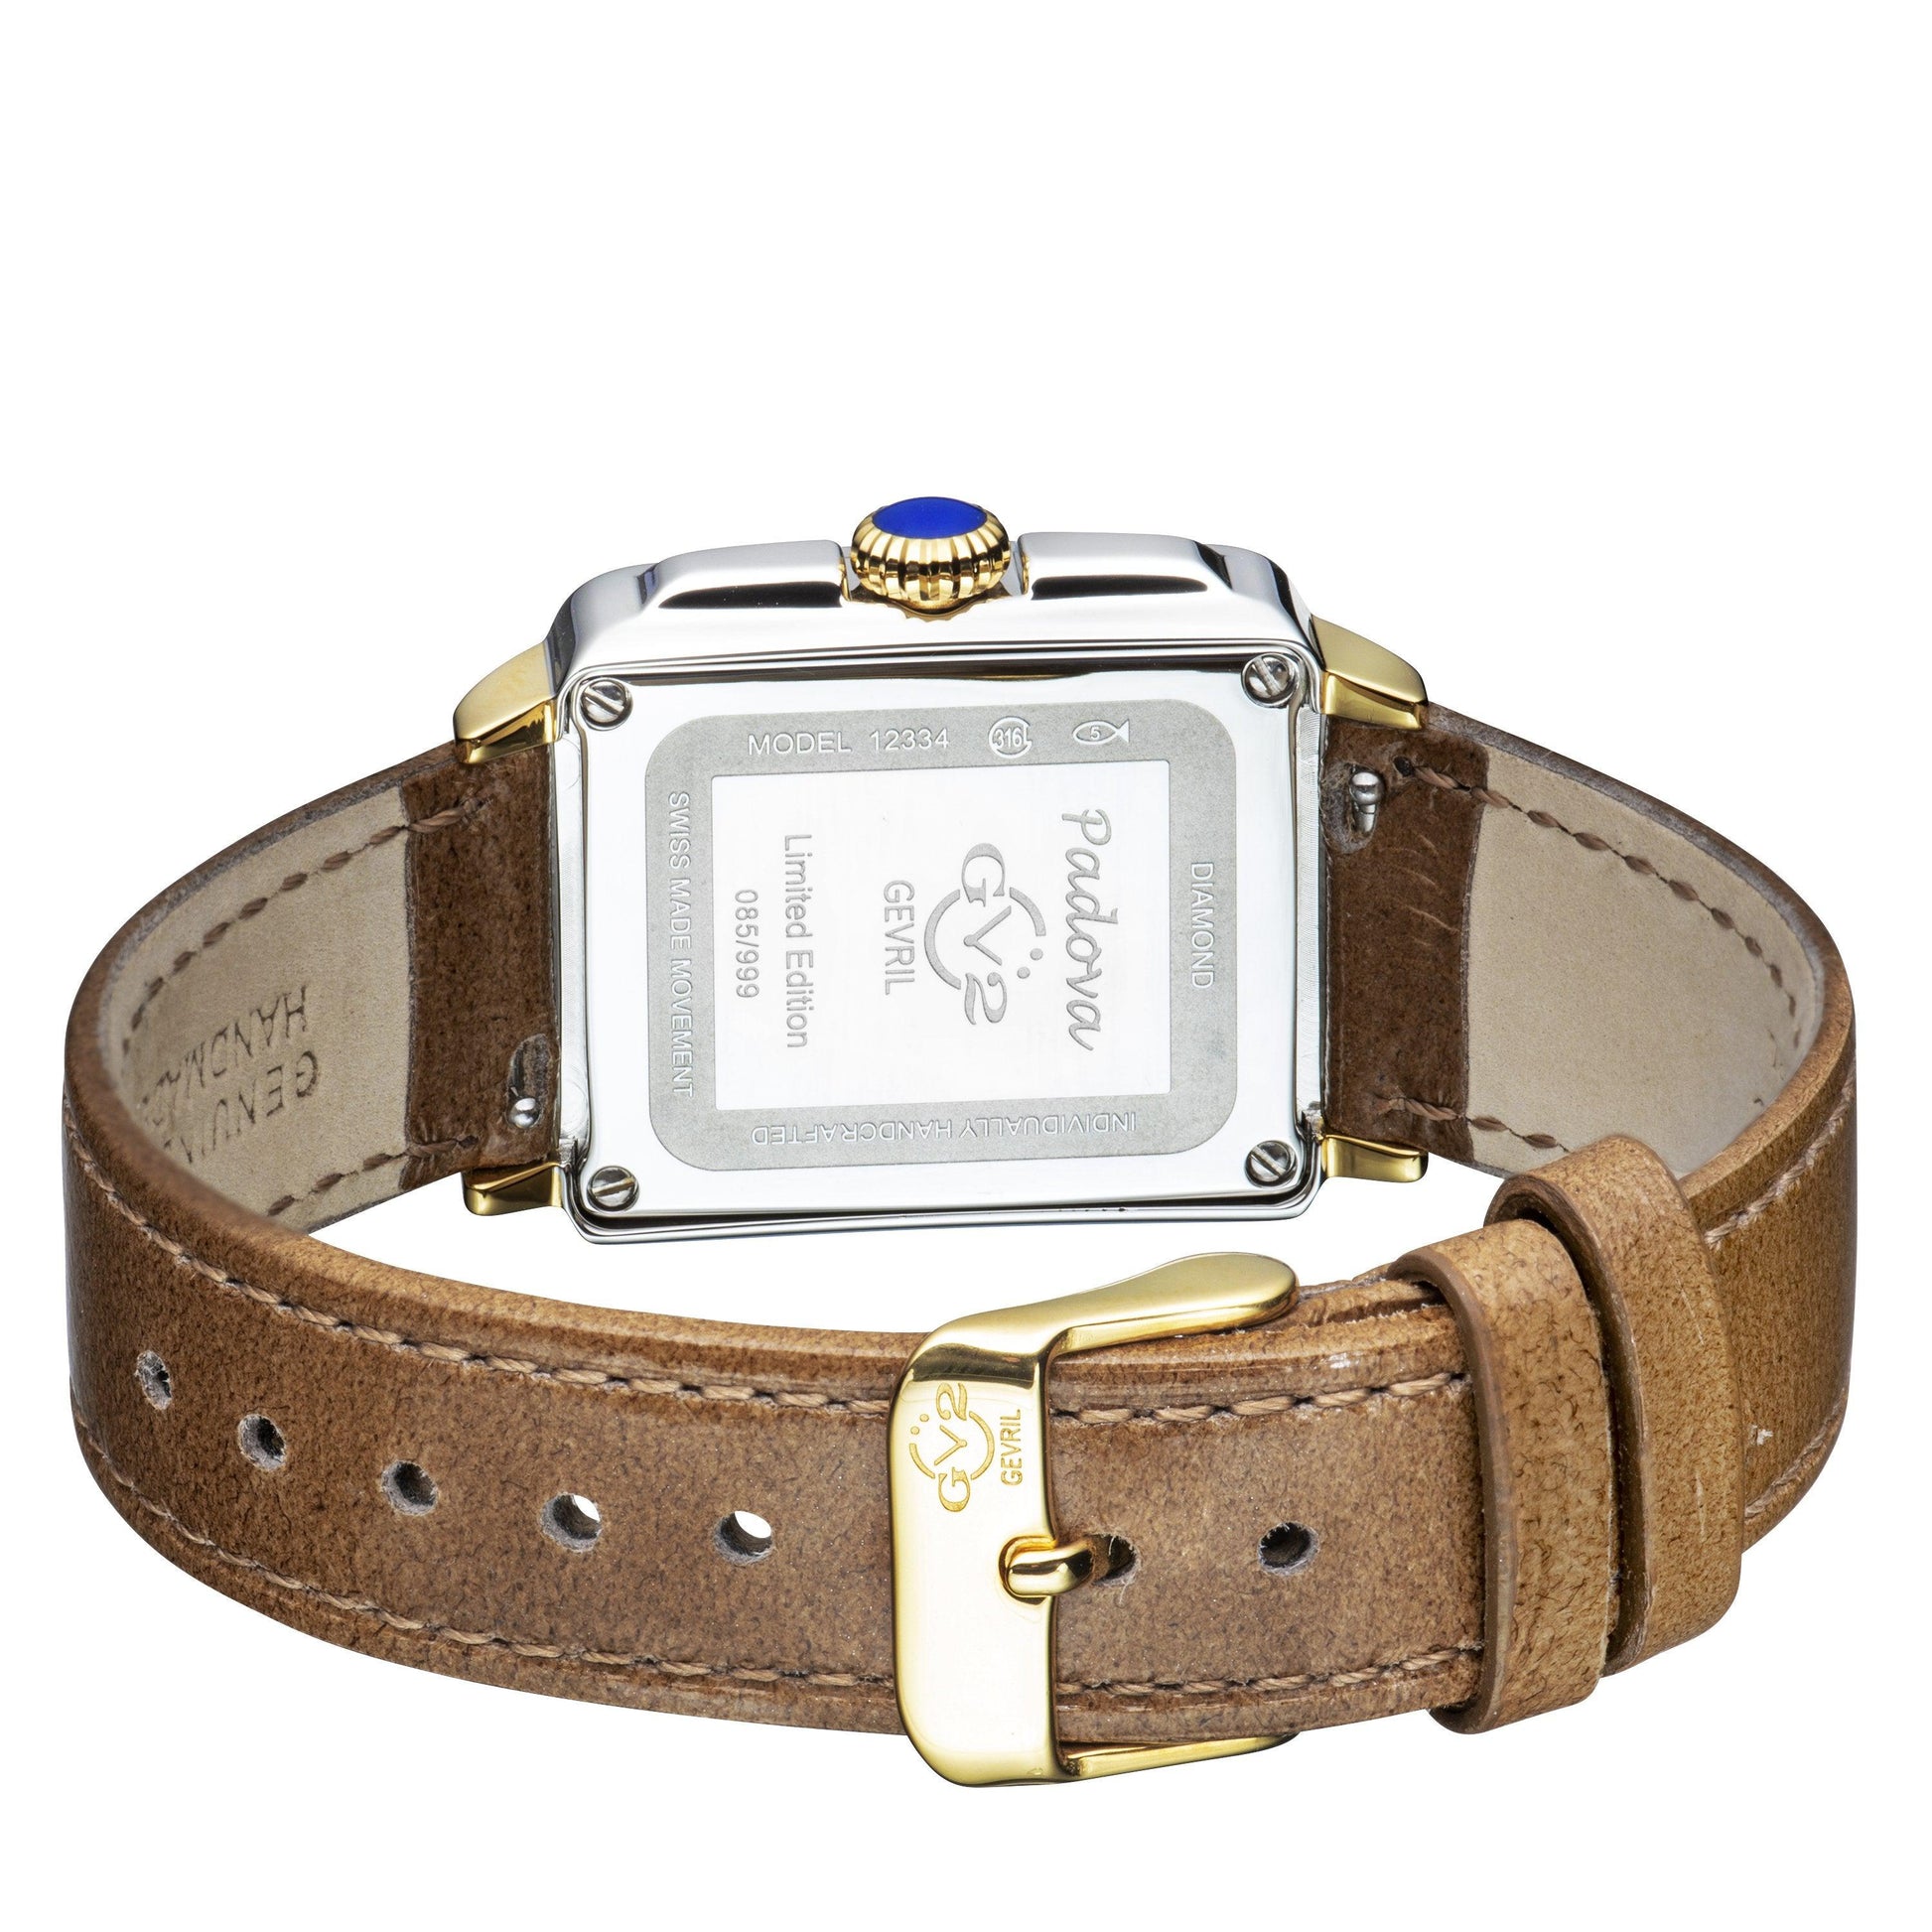 Gevril-Luxury-Swiss-Watches-GV2 Padova Gemstone-12334